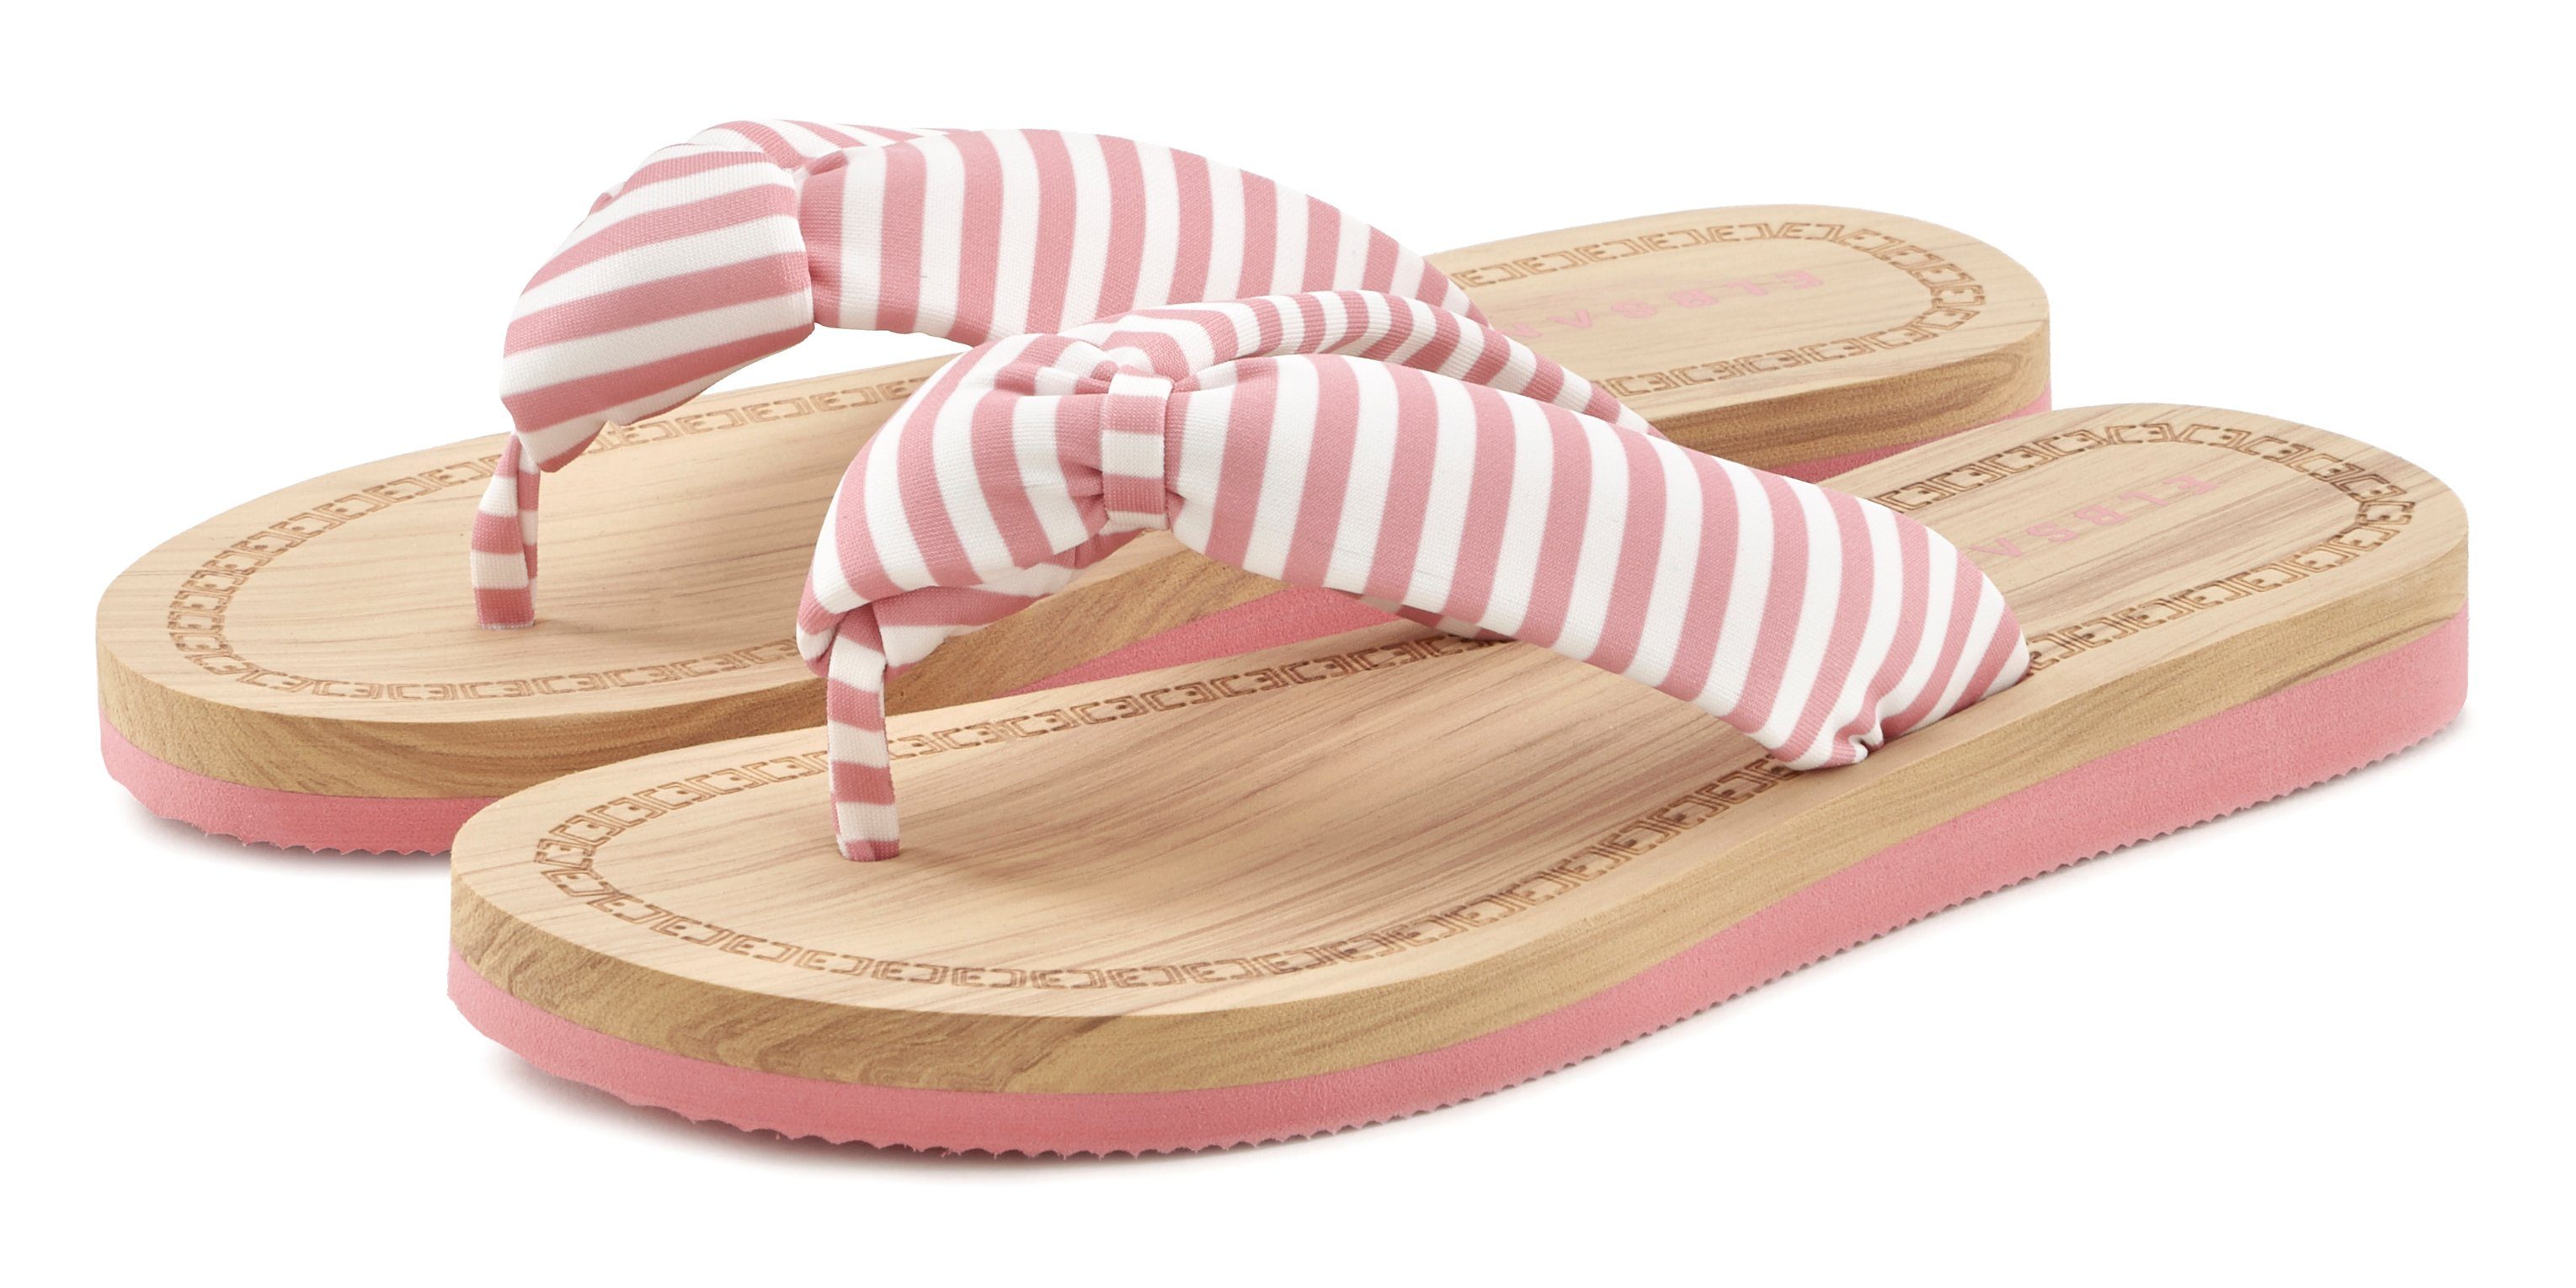 Elbsand Badezehentrenner Sandale, Pantolette, Badeschuh ultraleicht VEGAN rosa-gestreift | Badelatschen